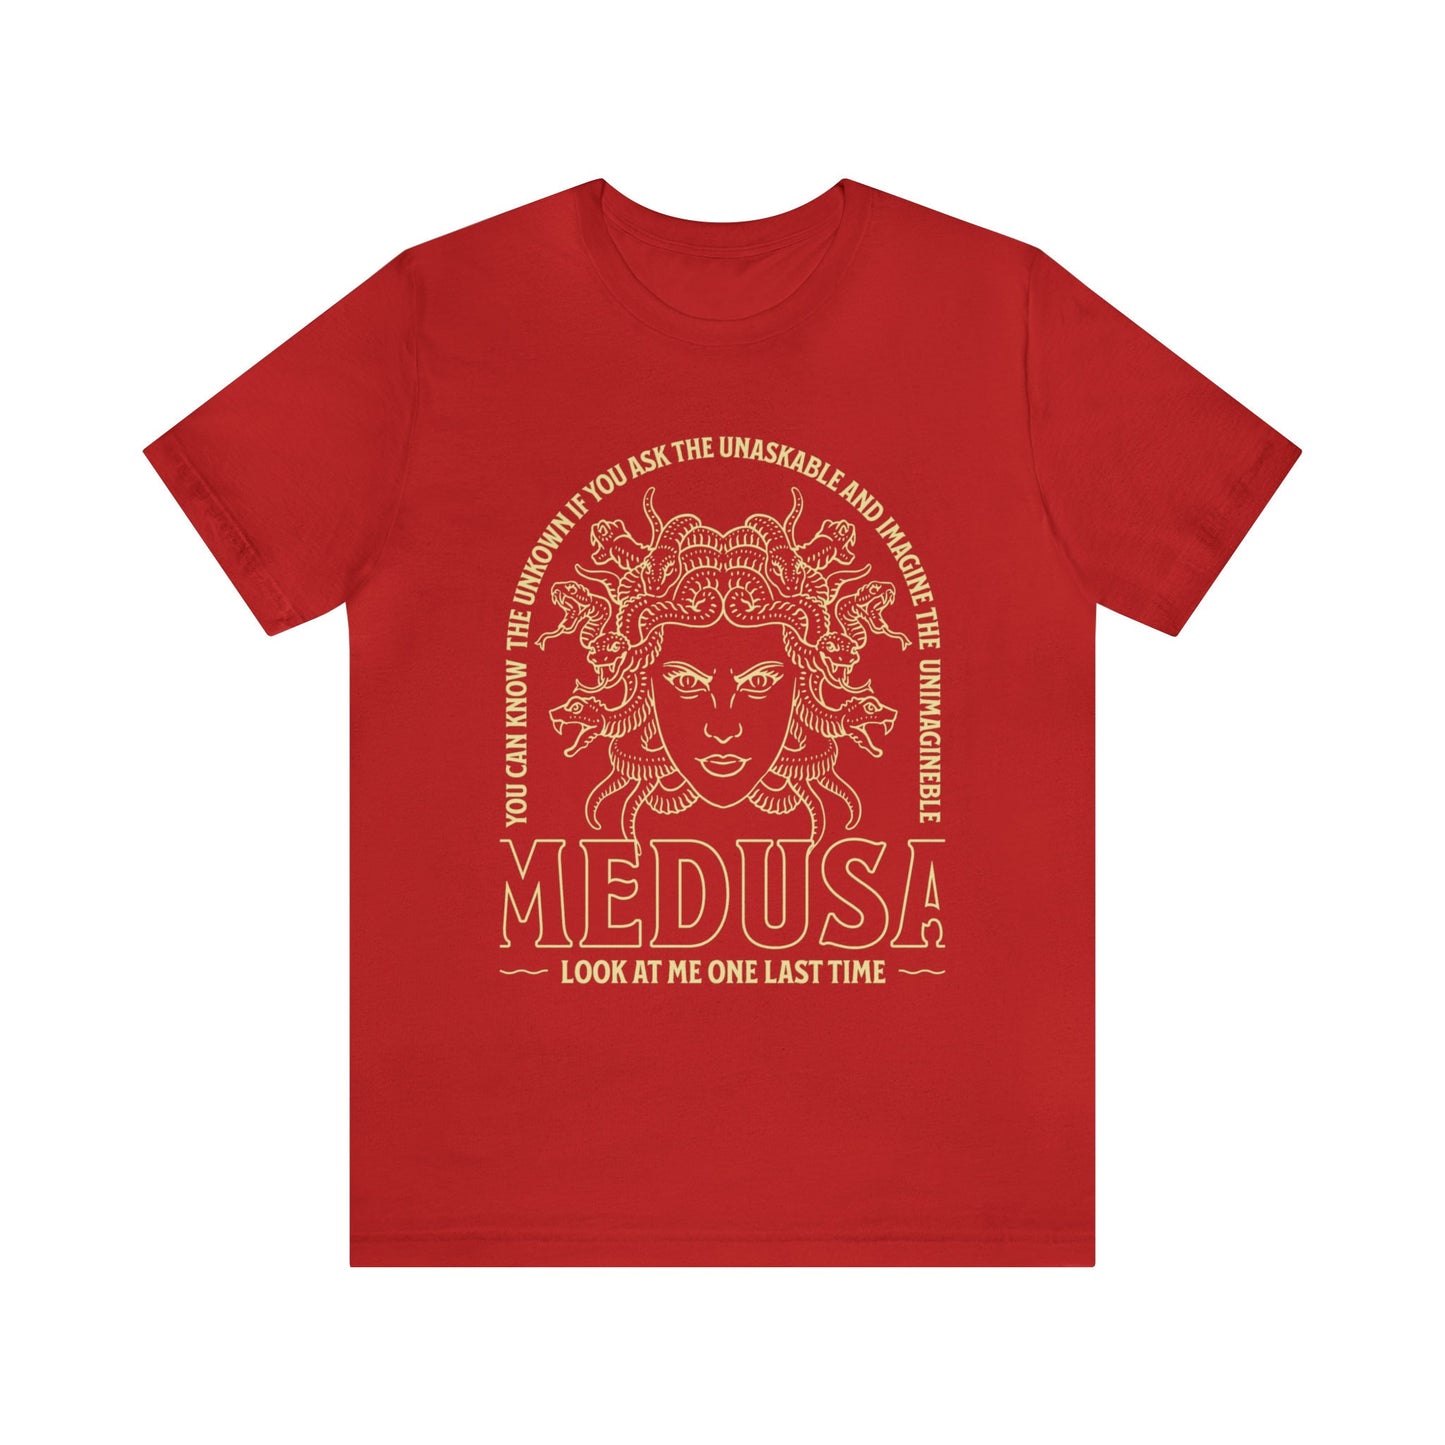 Medusa | Medusa Costume | Aeonium Medusa | Medusa Art | Medusa Print | Medusa Head Piece | Greek Mythology | Mythology Shirt | Persephone